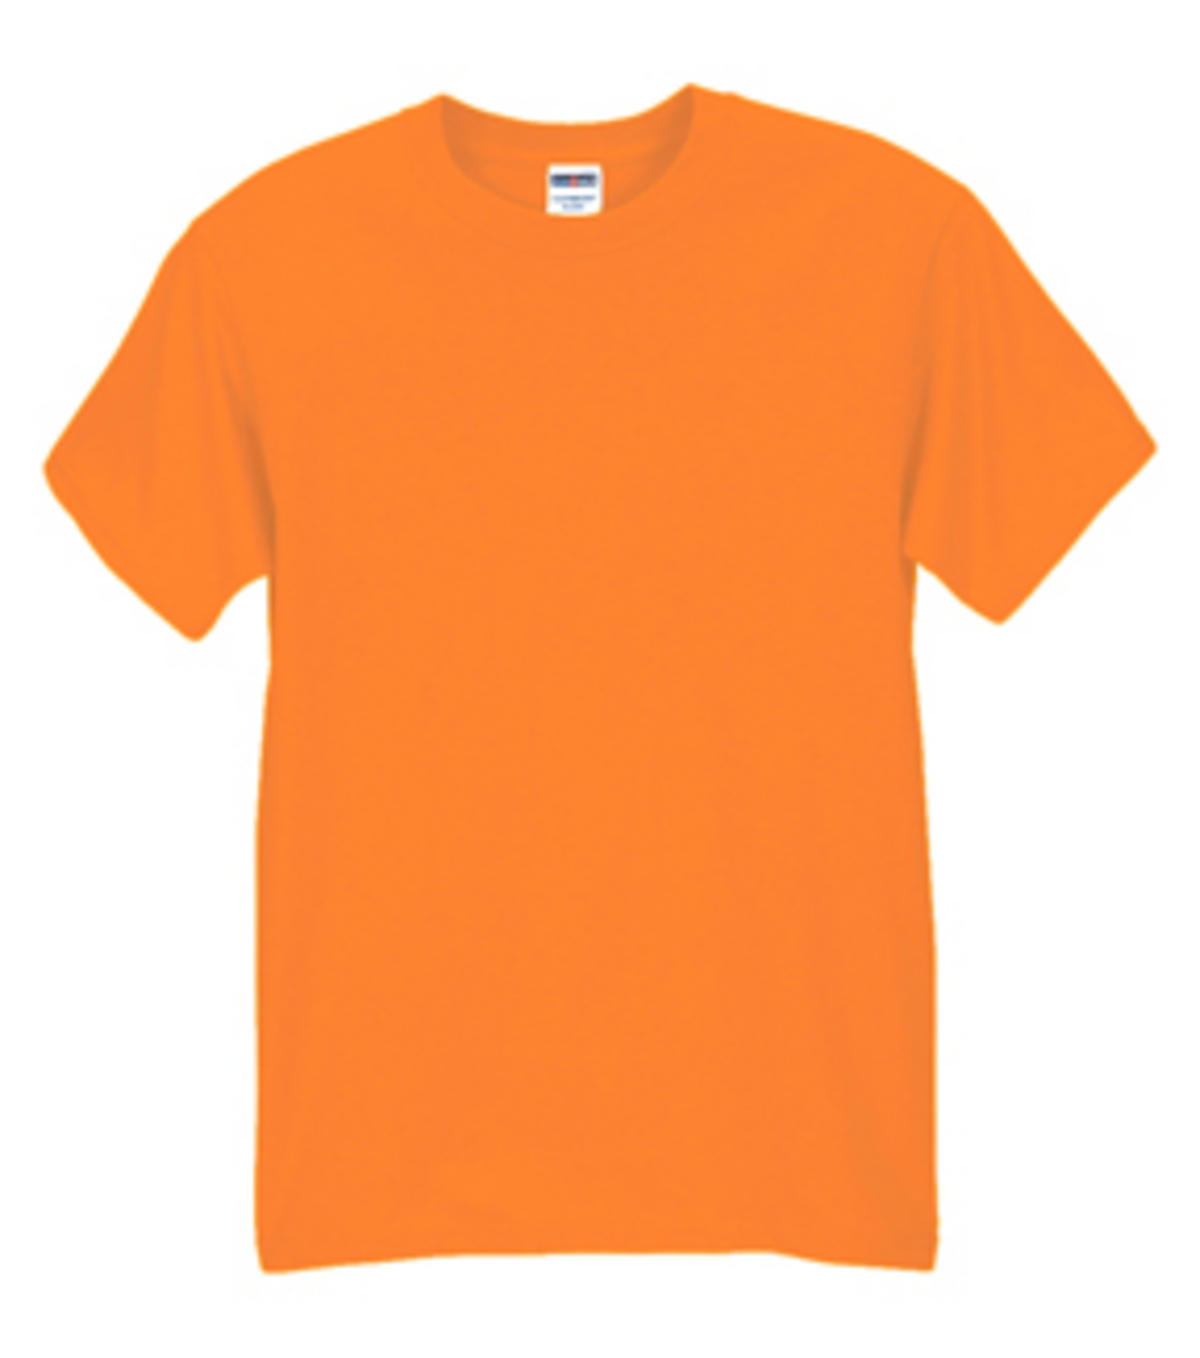 orange t shirt clipart - photo #32